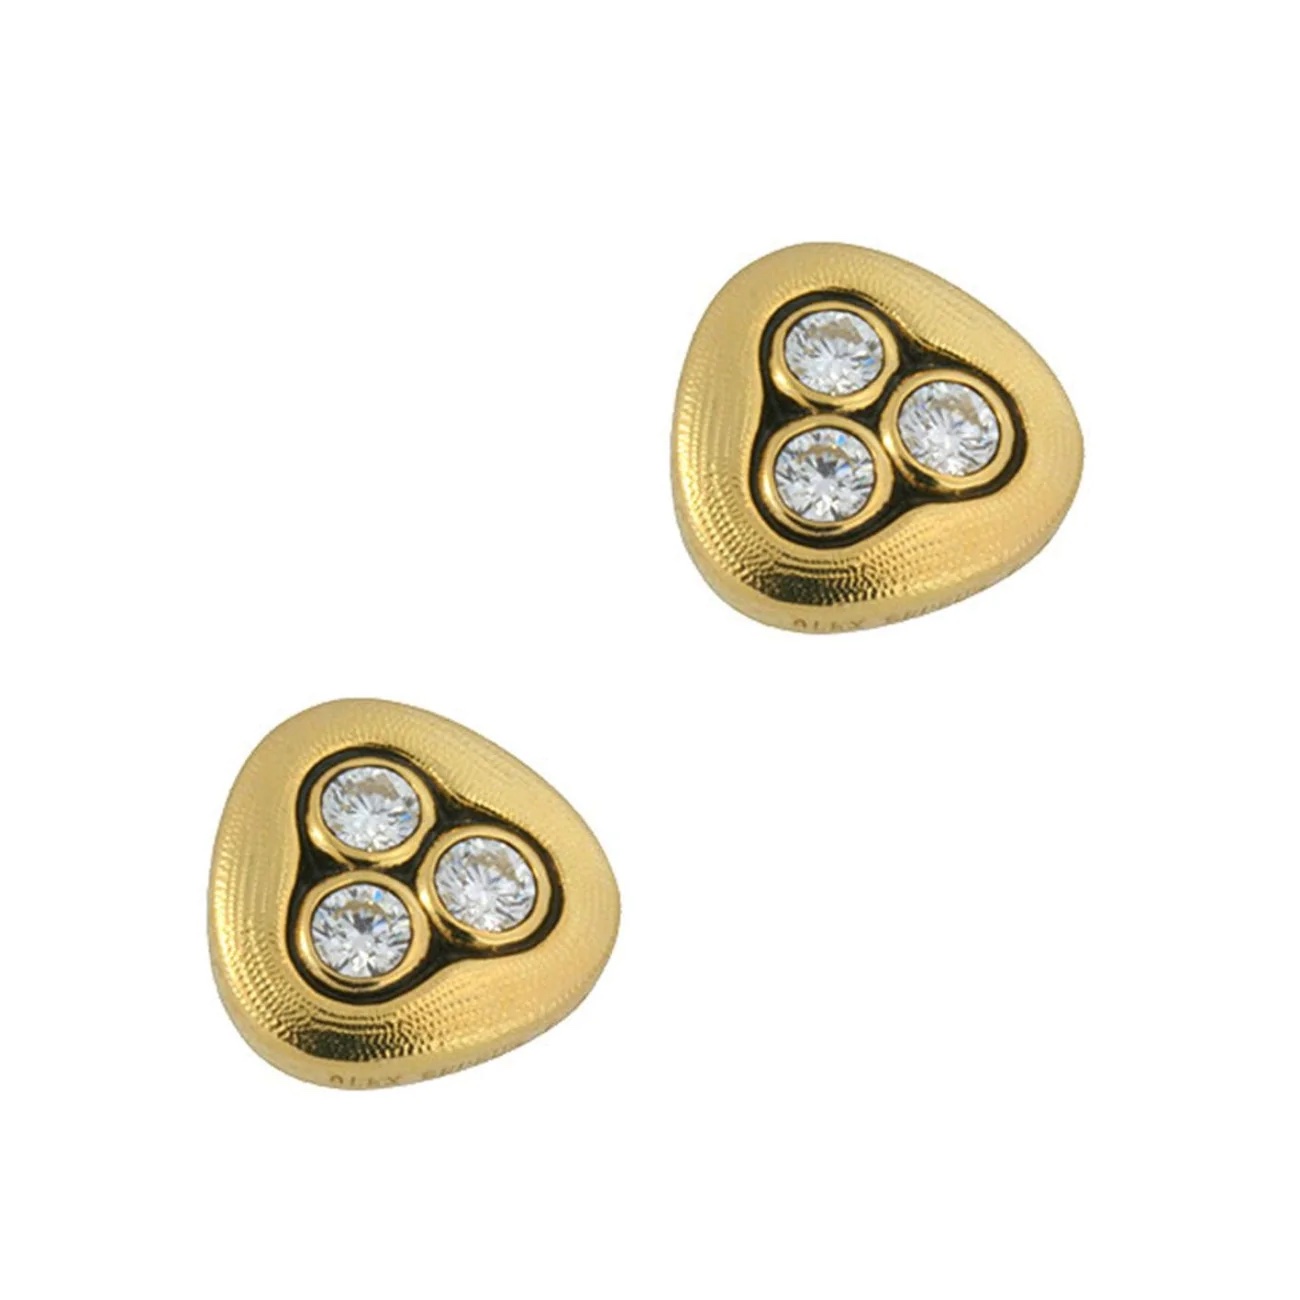 Alex Sepkus 18k Yellow Gold Diamond Stud Earrings